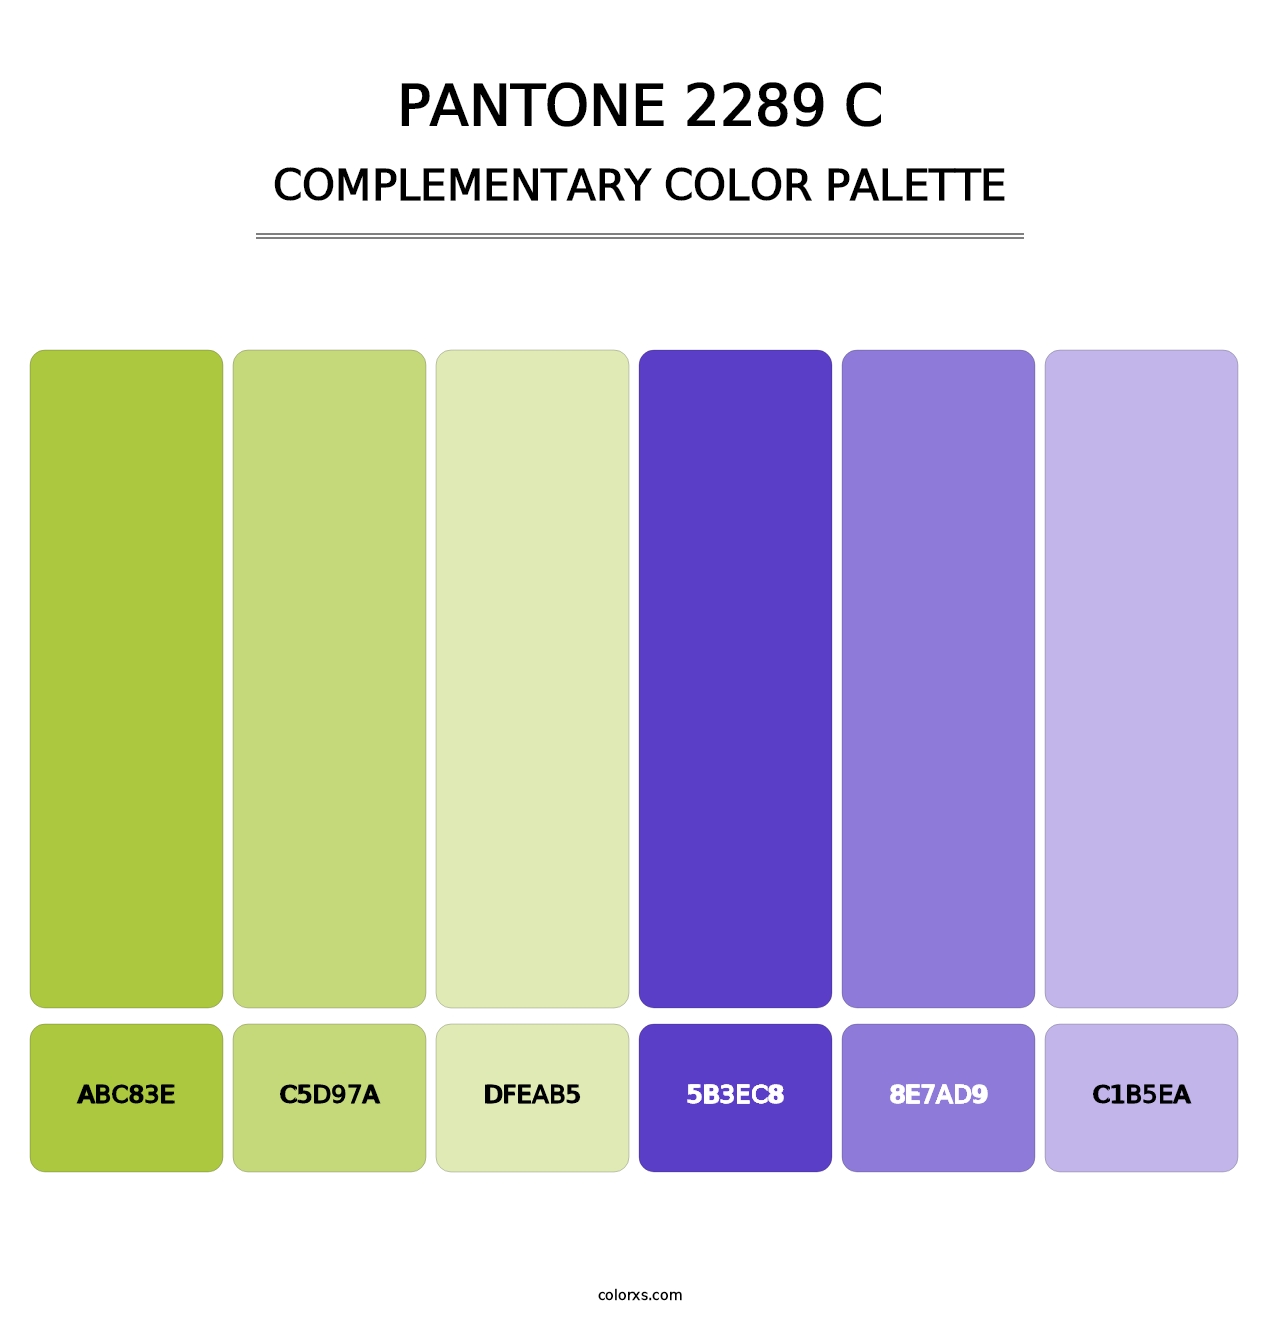 PANTONE 2289 C - Complementary Color Palette